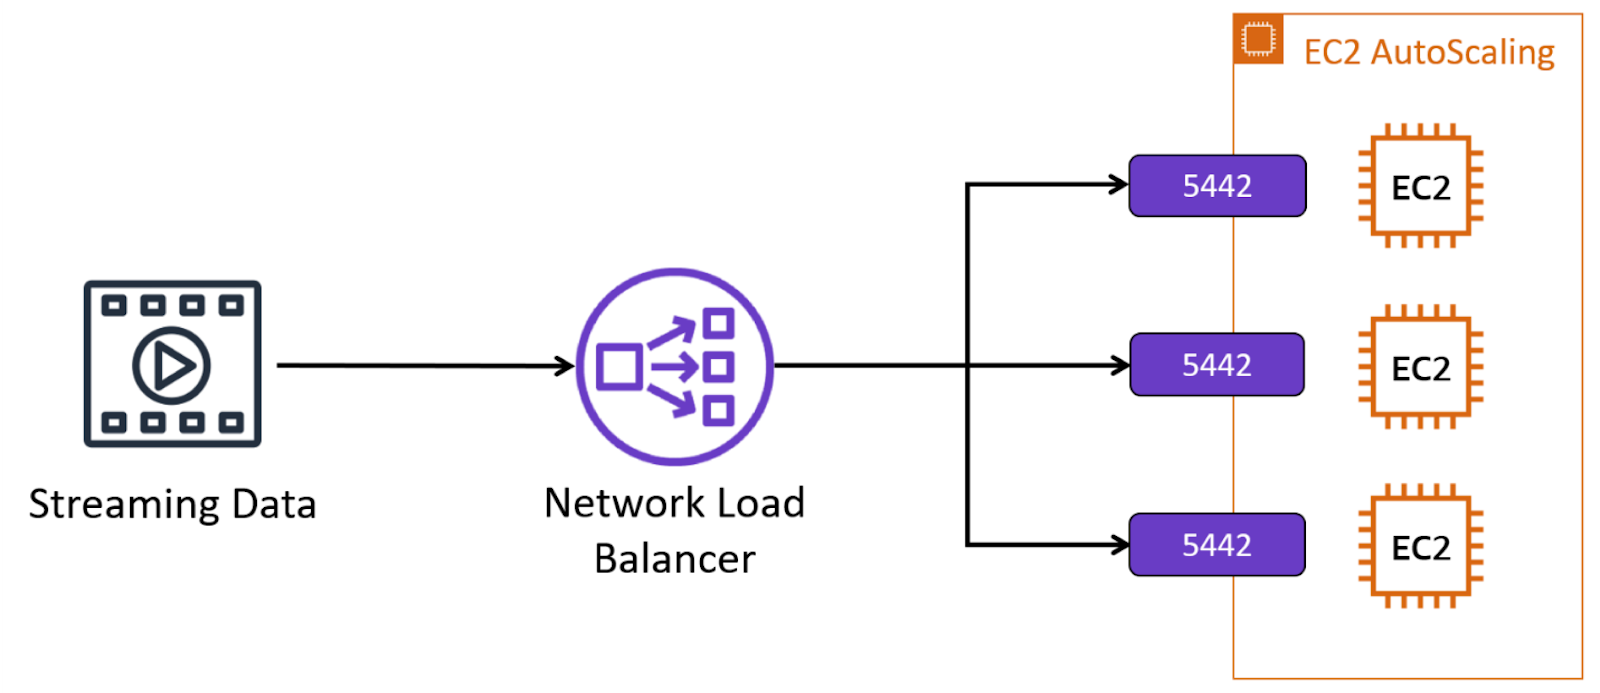 NLB (Network Load Balancer)